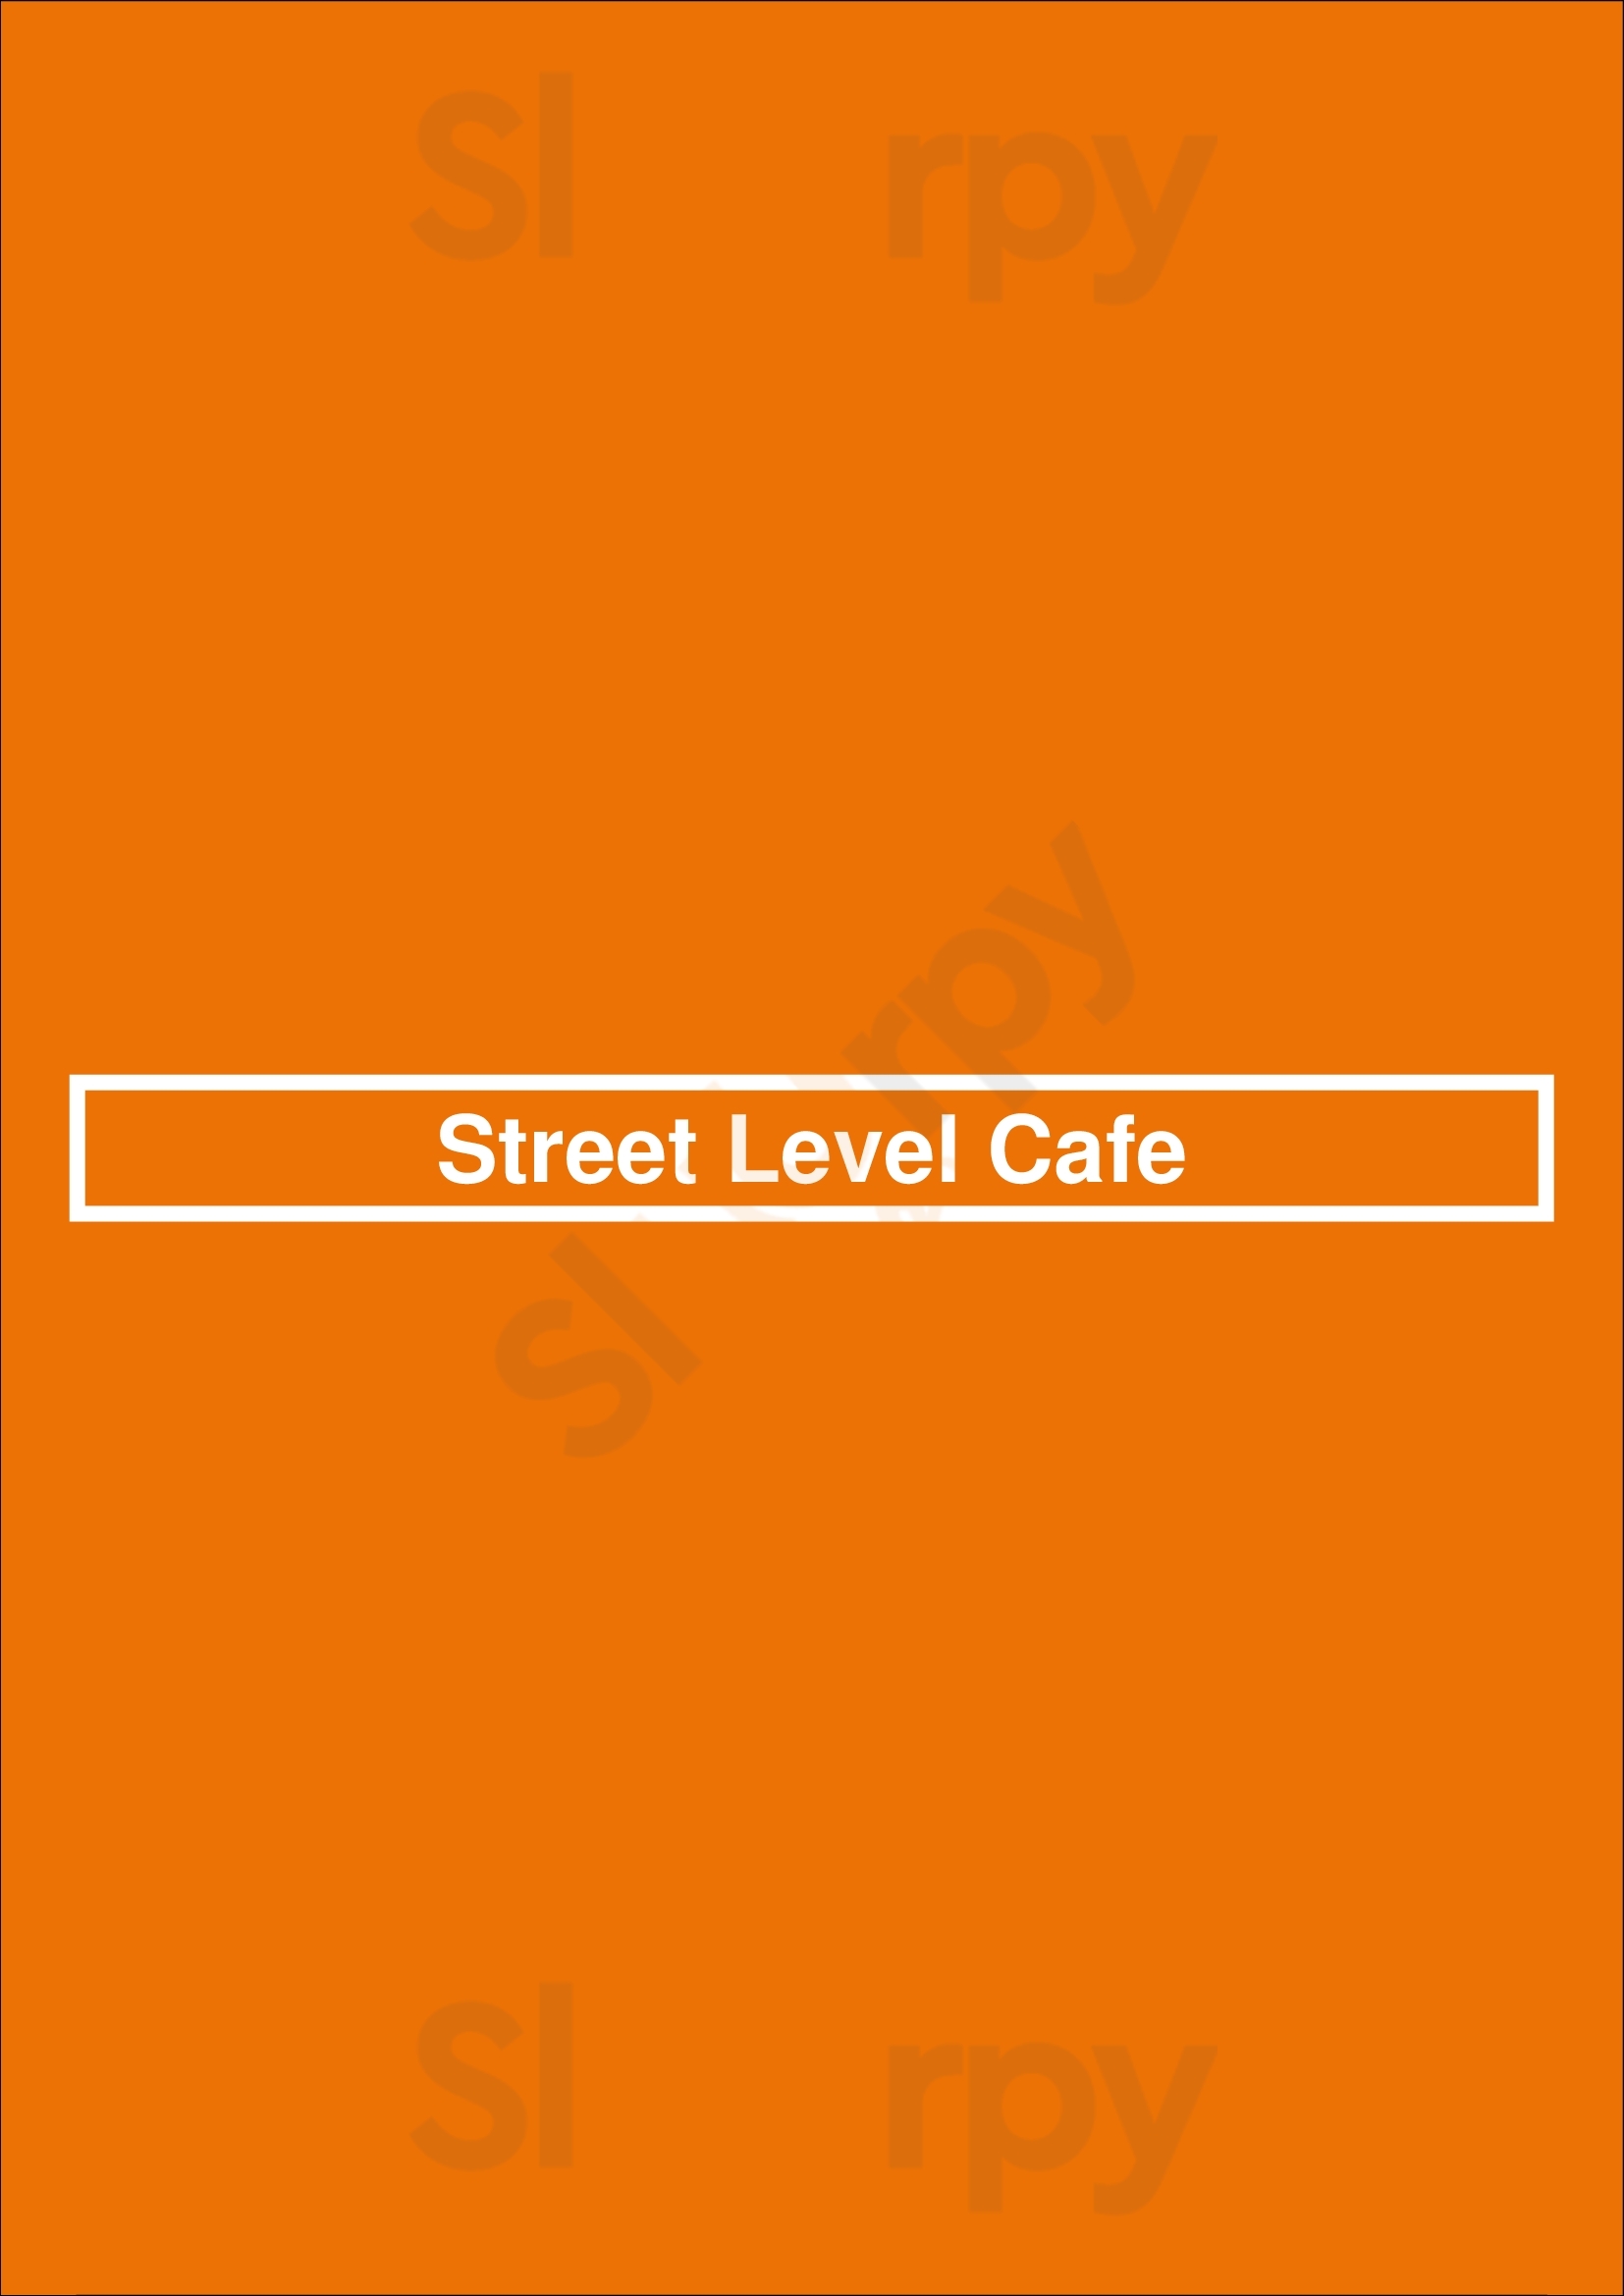 Street Level Cafe Los Angeles Menu - 1